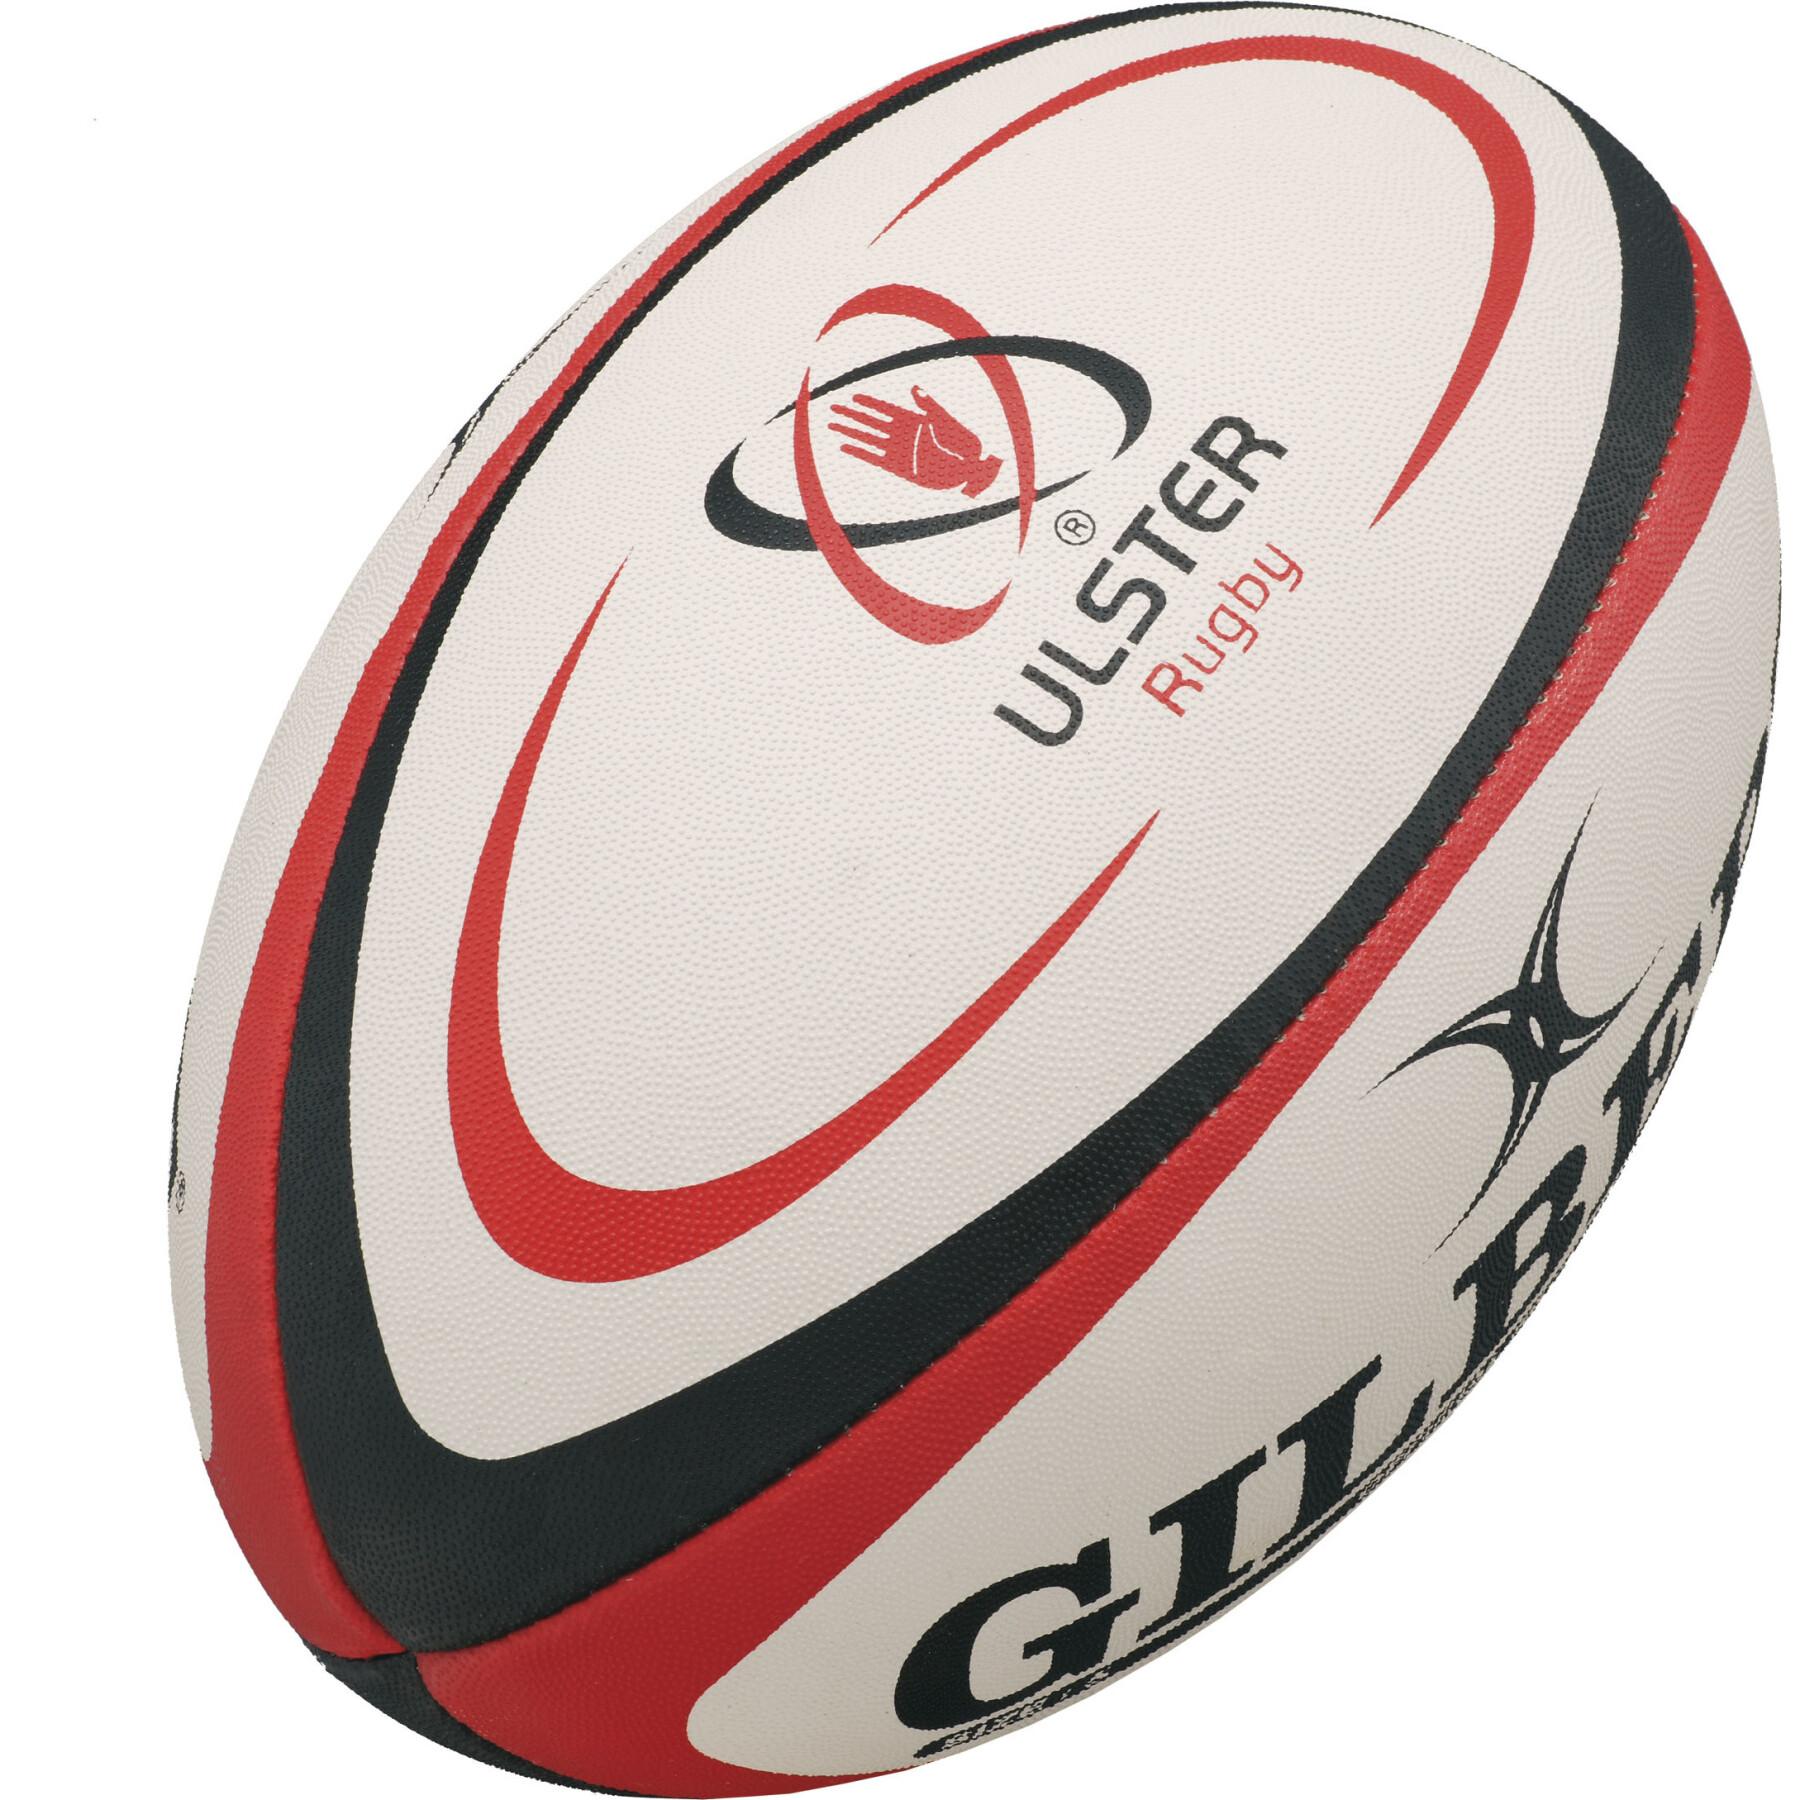 Mini ballon de rugby Gilbert Ulster (taille 1)